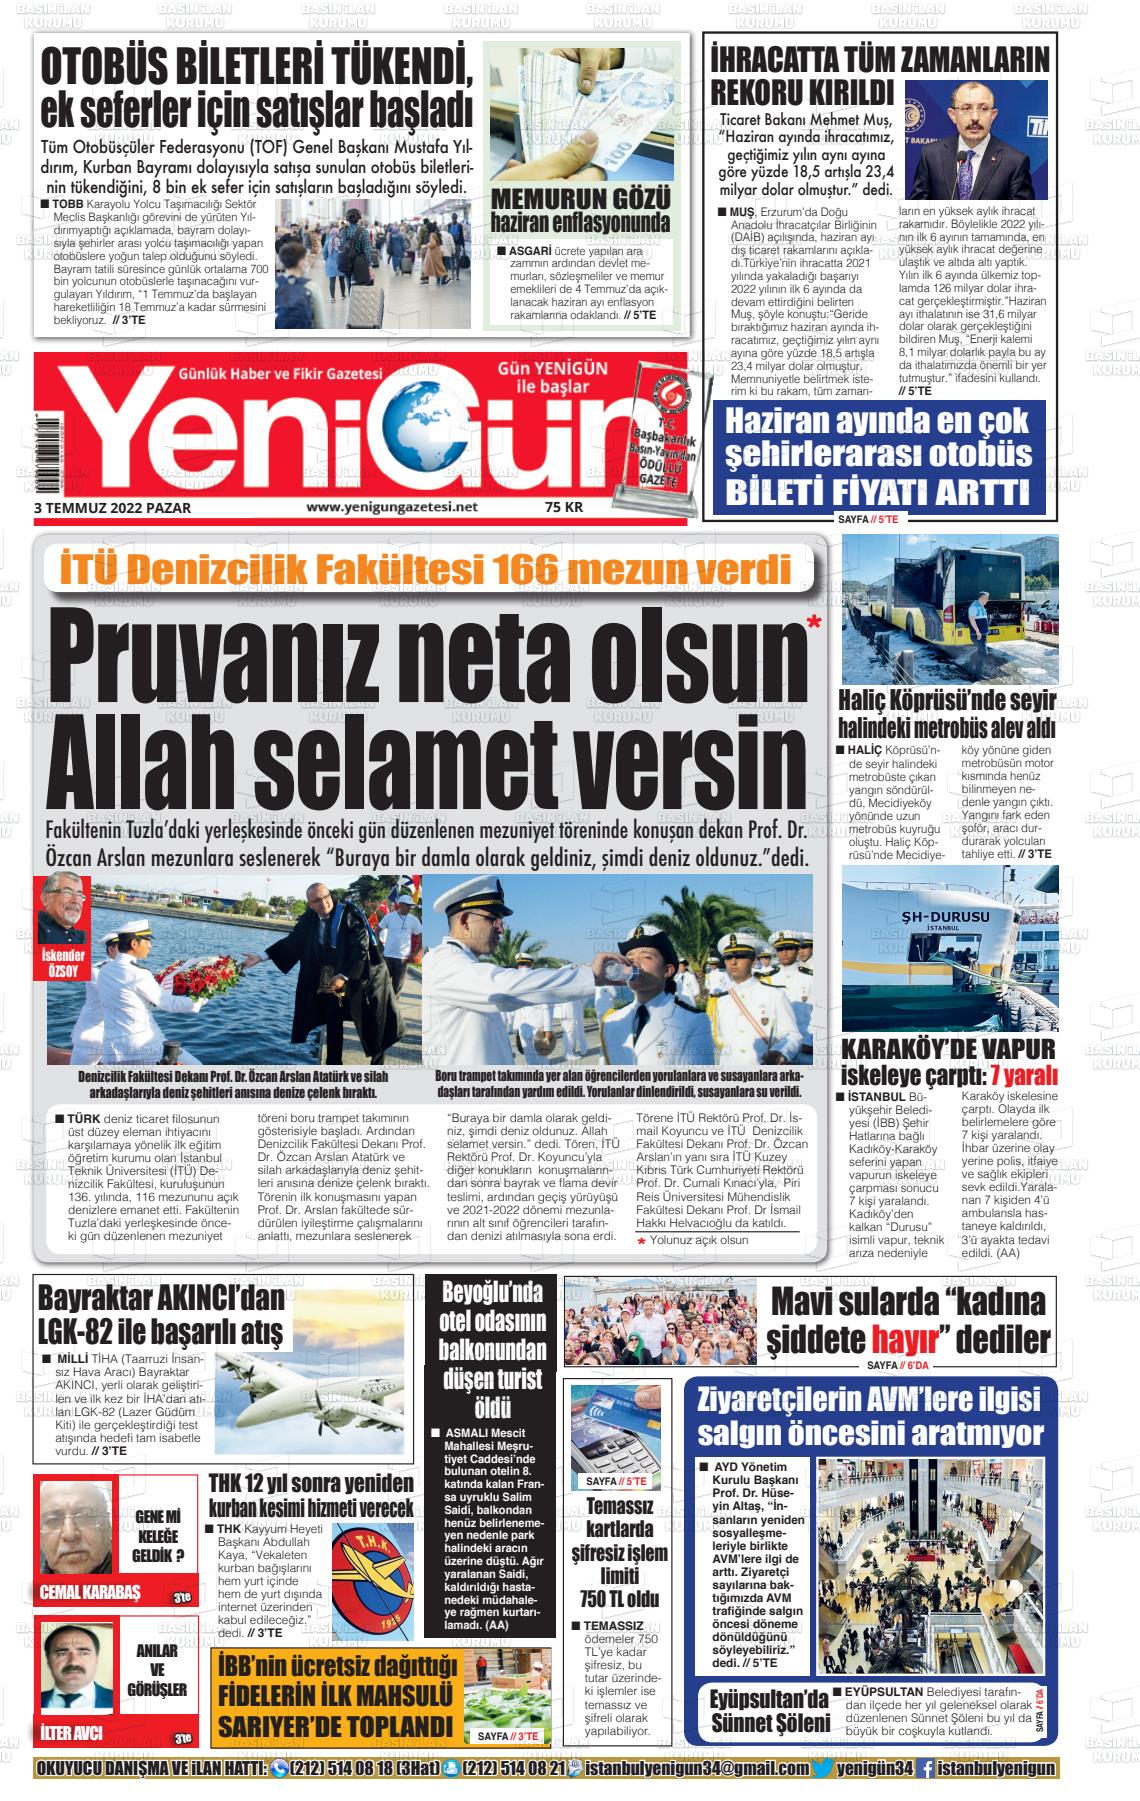 03 Temmuz 2022 Fatih Yenigün Gazete Manşeti